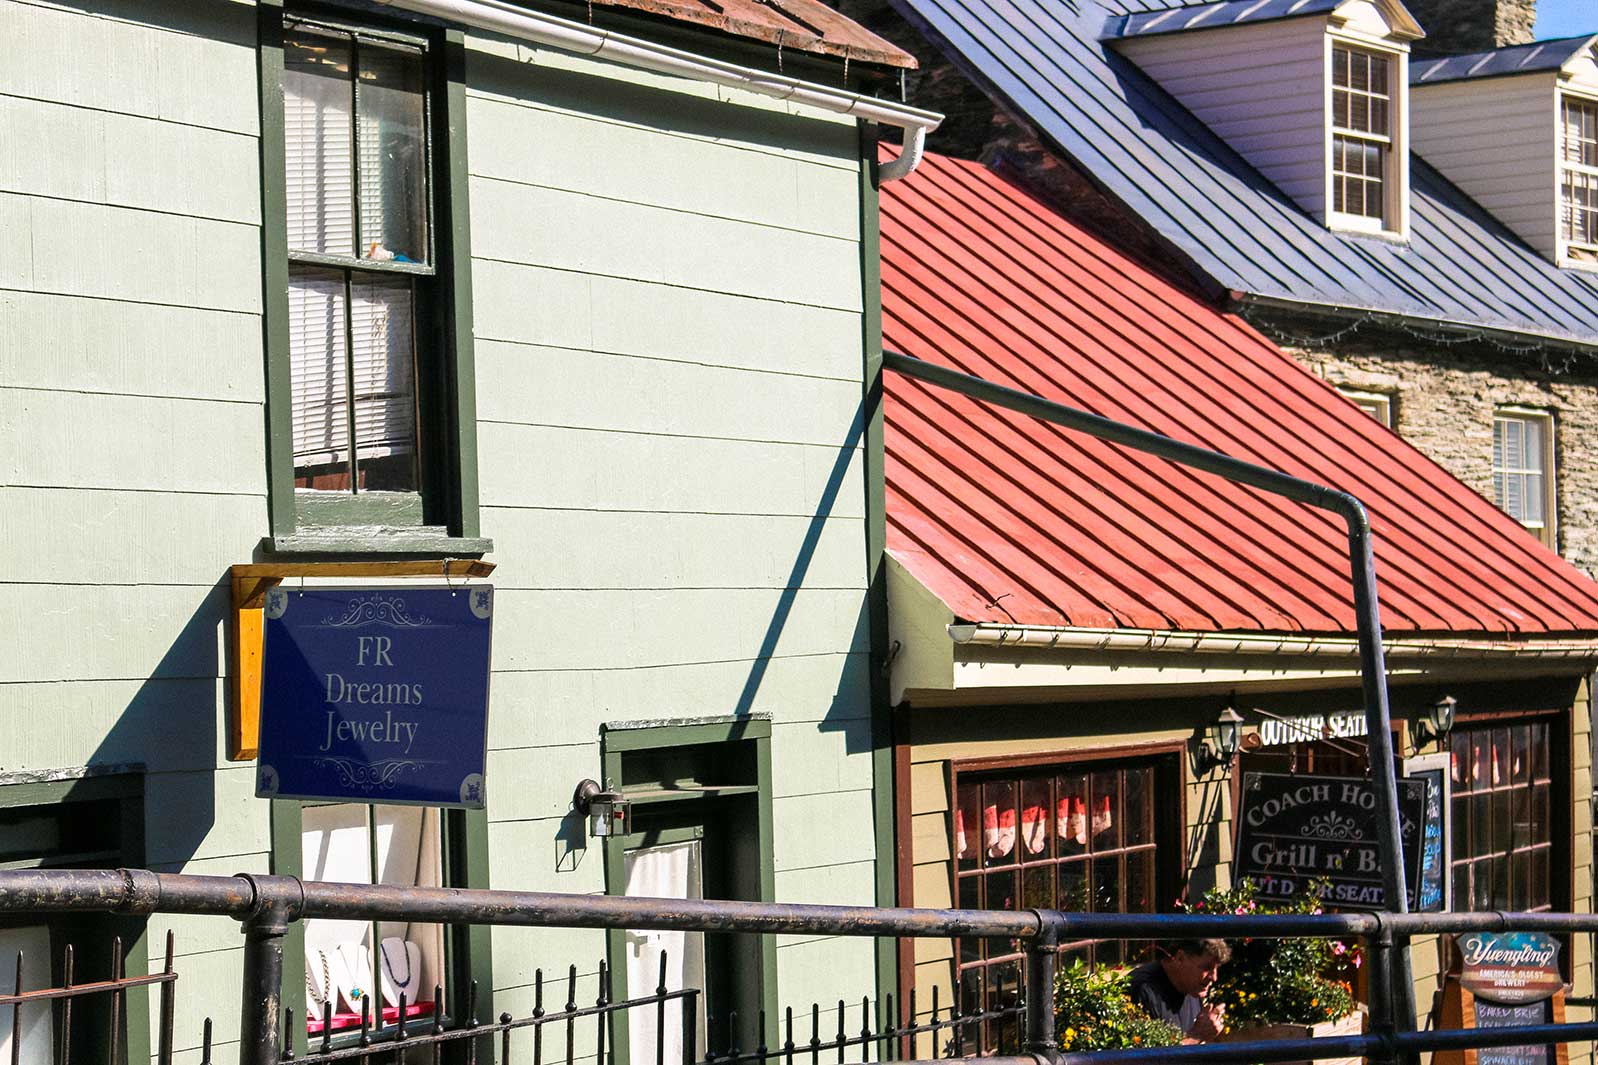 Shops and restaurants in Harper's Ferry, WV